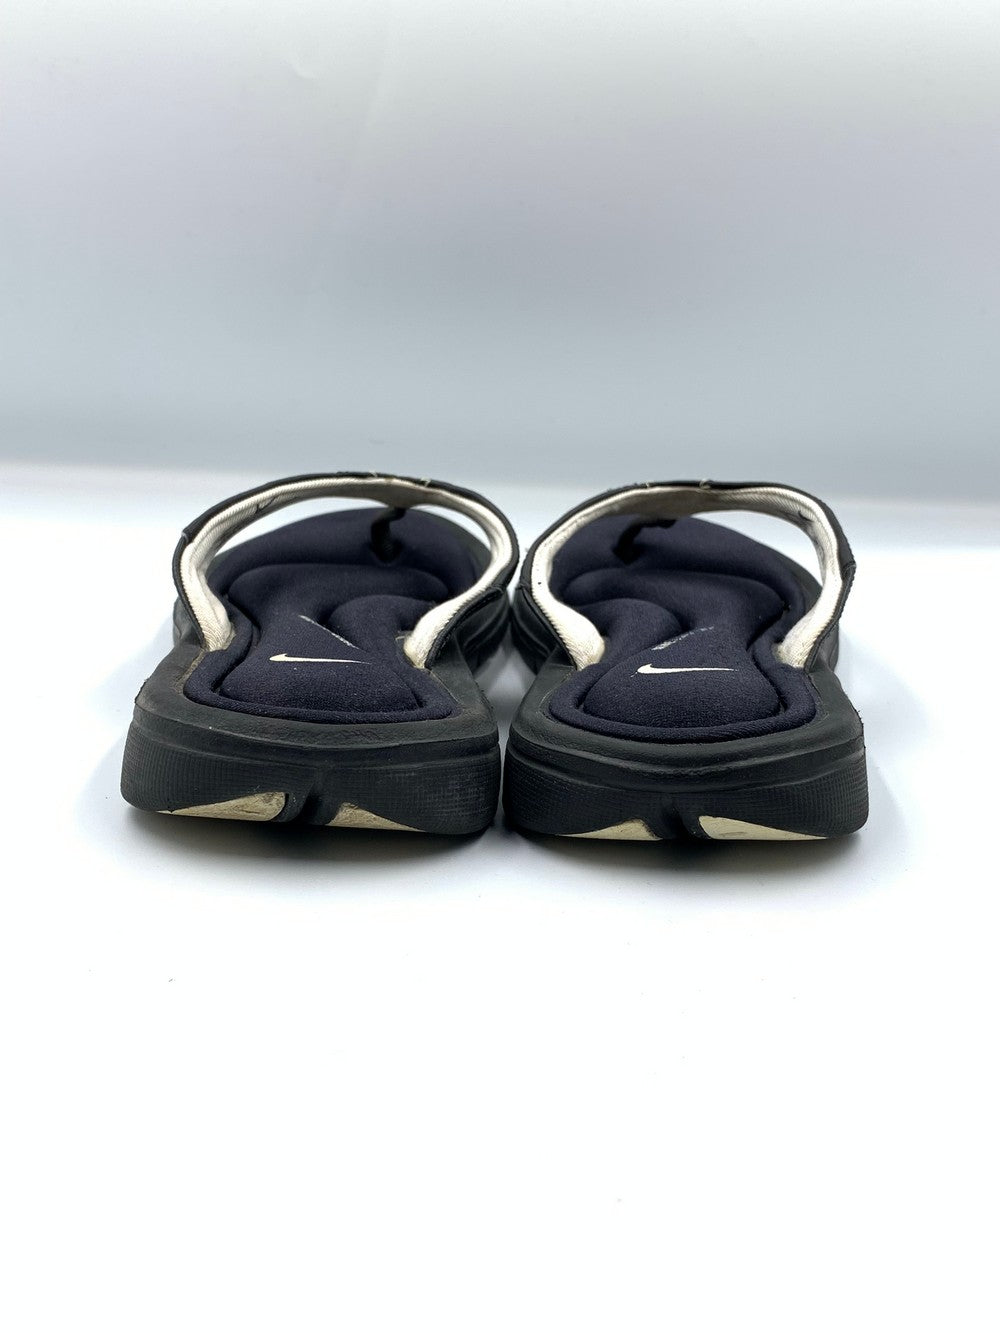 Nike Comfort Foot bed Original Brand For Women Slipper